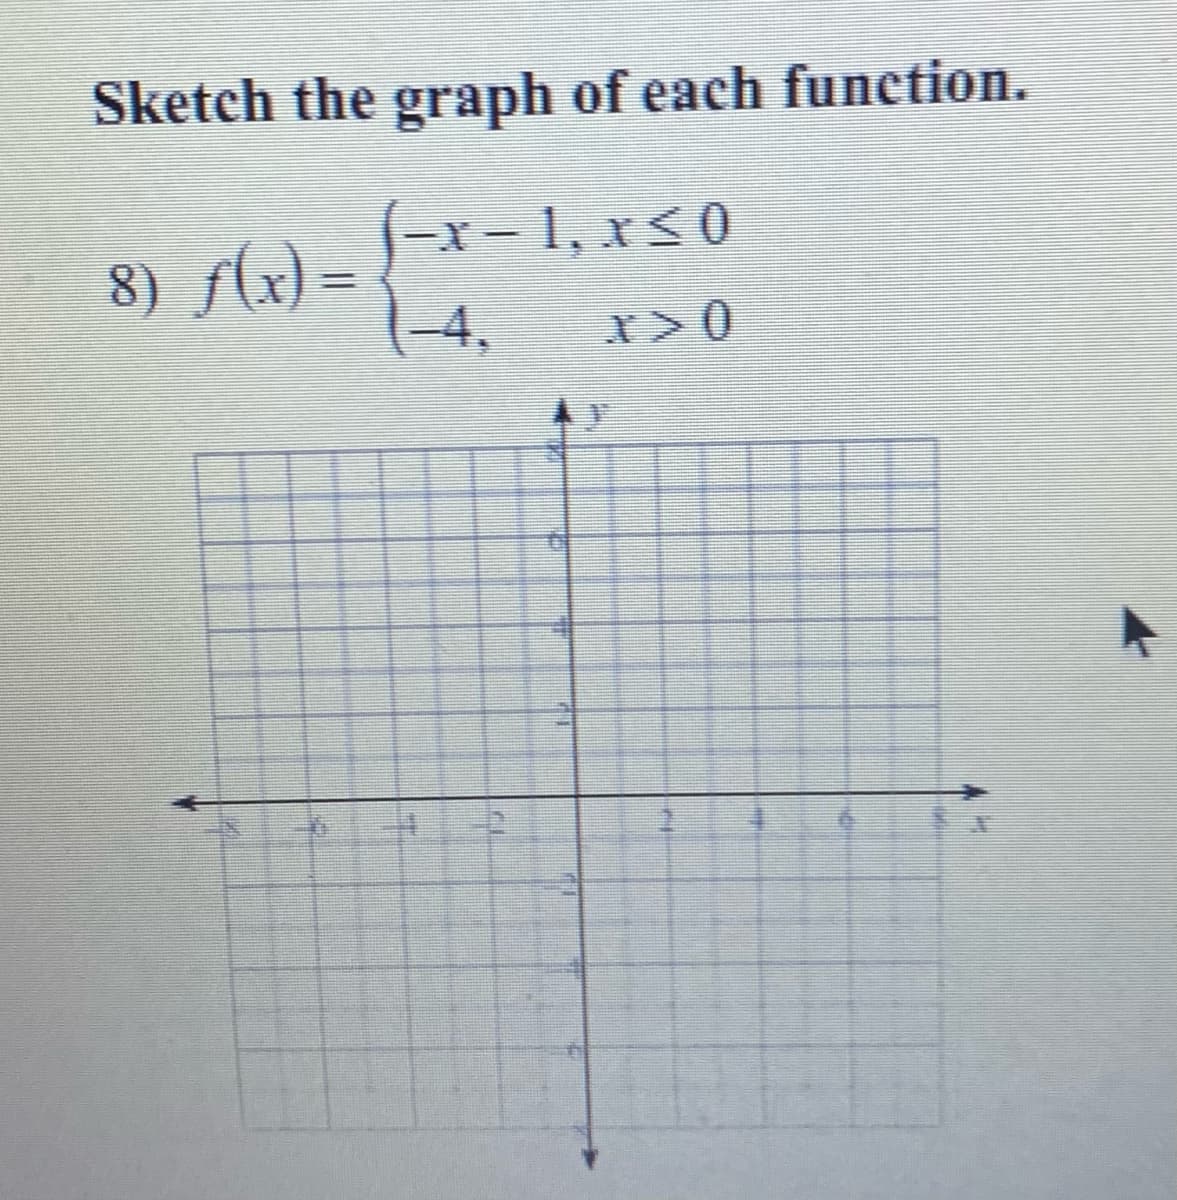 Sketch the graph of each function.
8) ƒ(x) = |-x- 1, x5 0
8) f(x)=
(-4,
